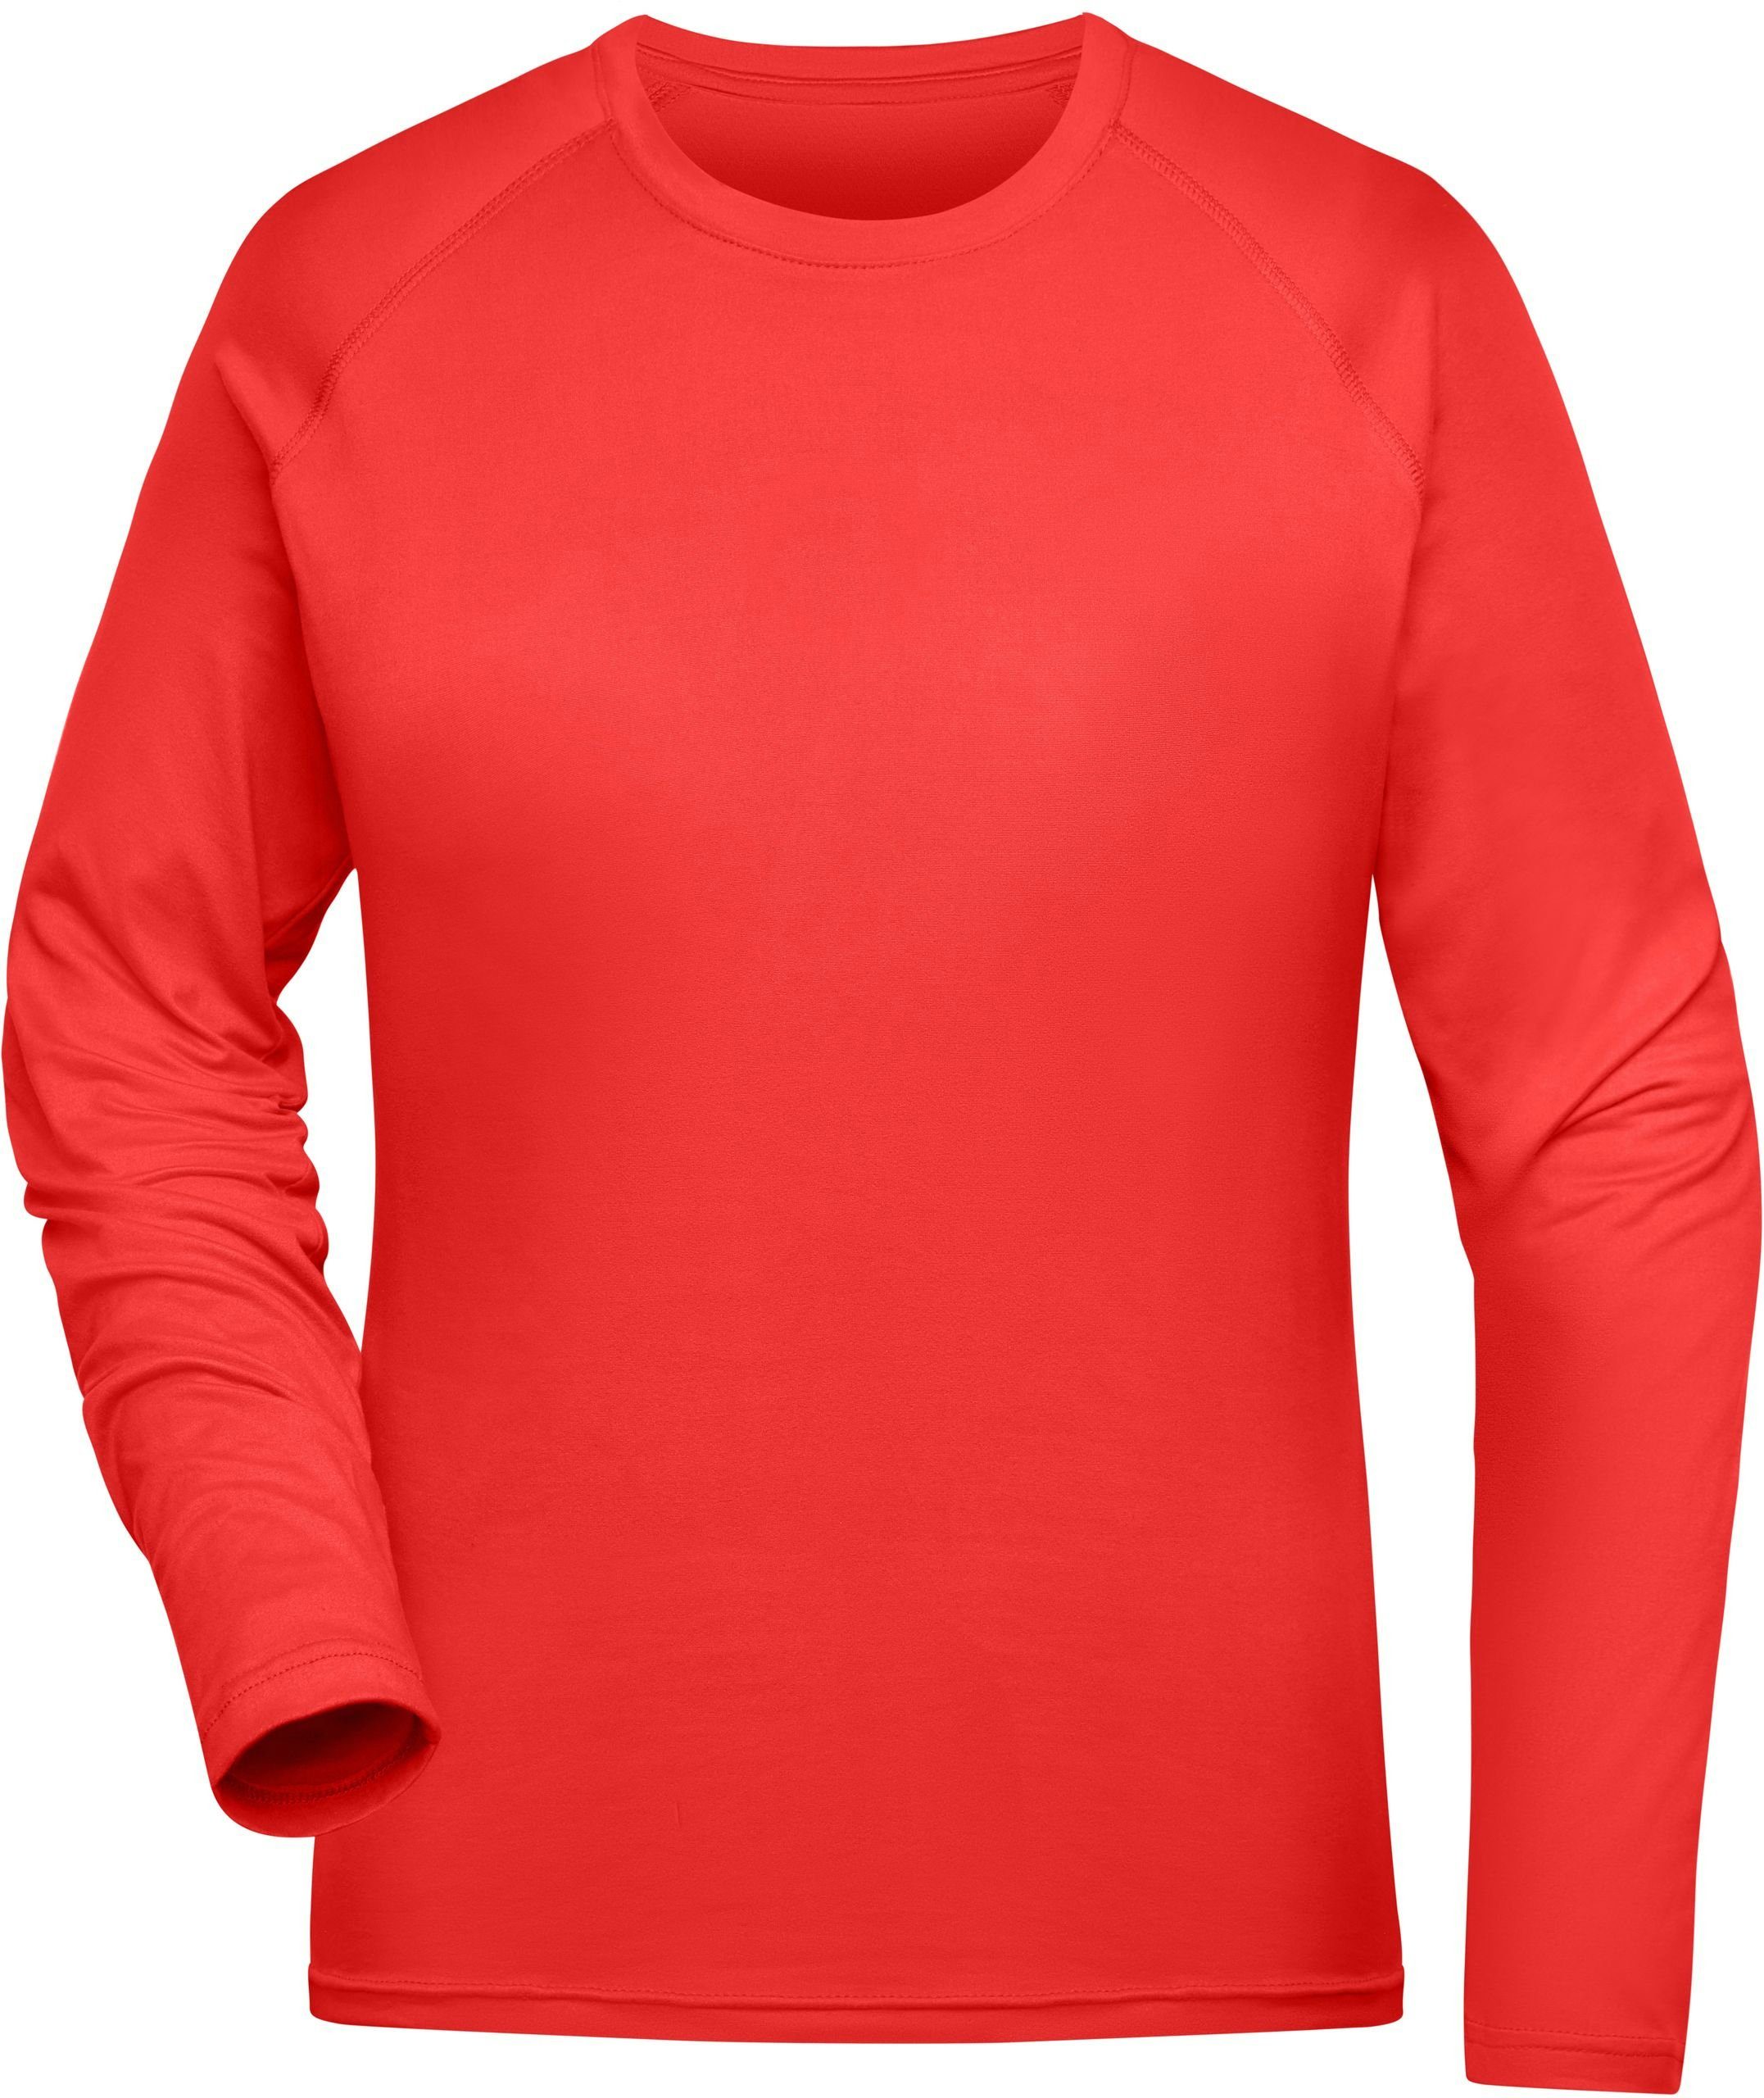 Bright FaS50521 Nicholson Polyester langarm aus Sport & Red James Trainingsshirt Shirt recyceltem